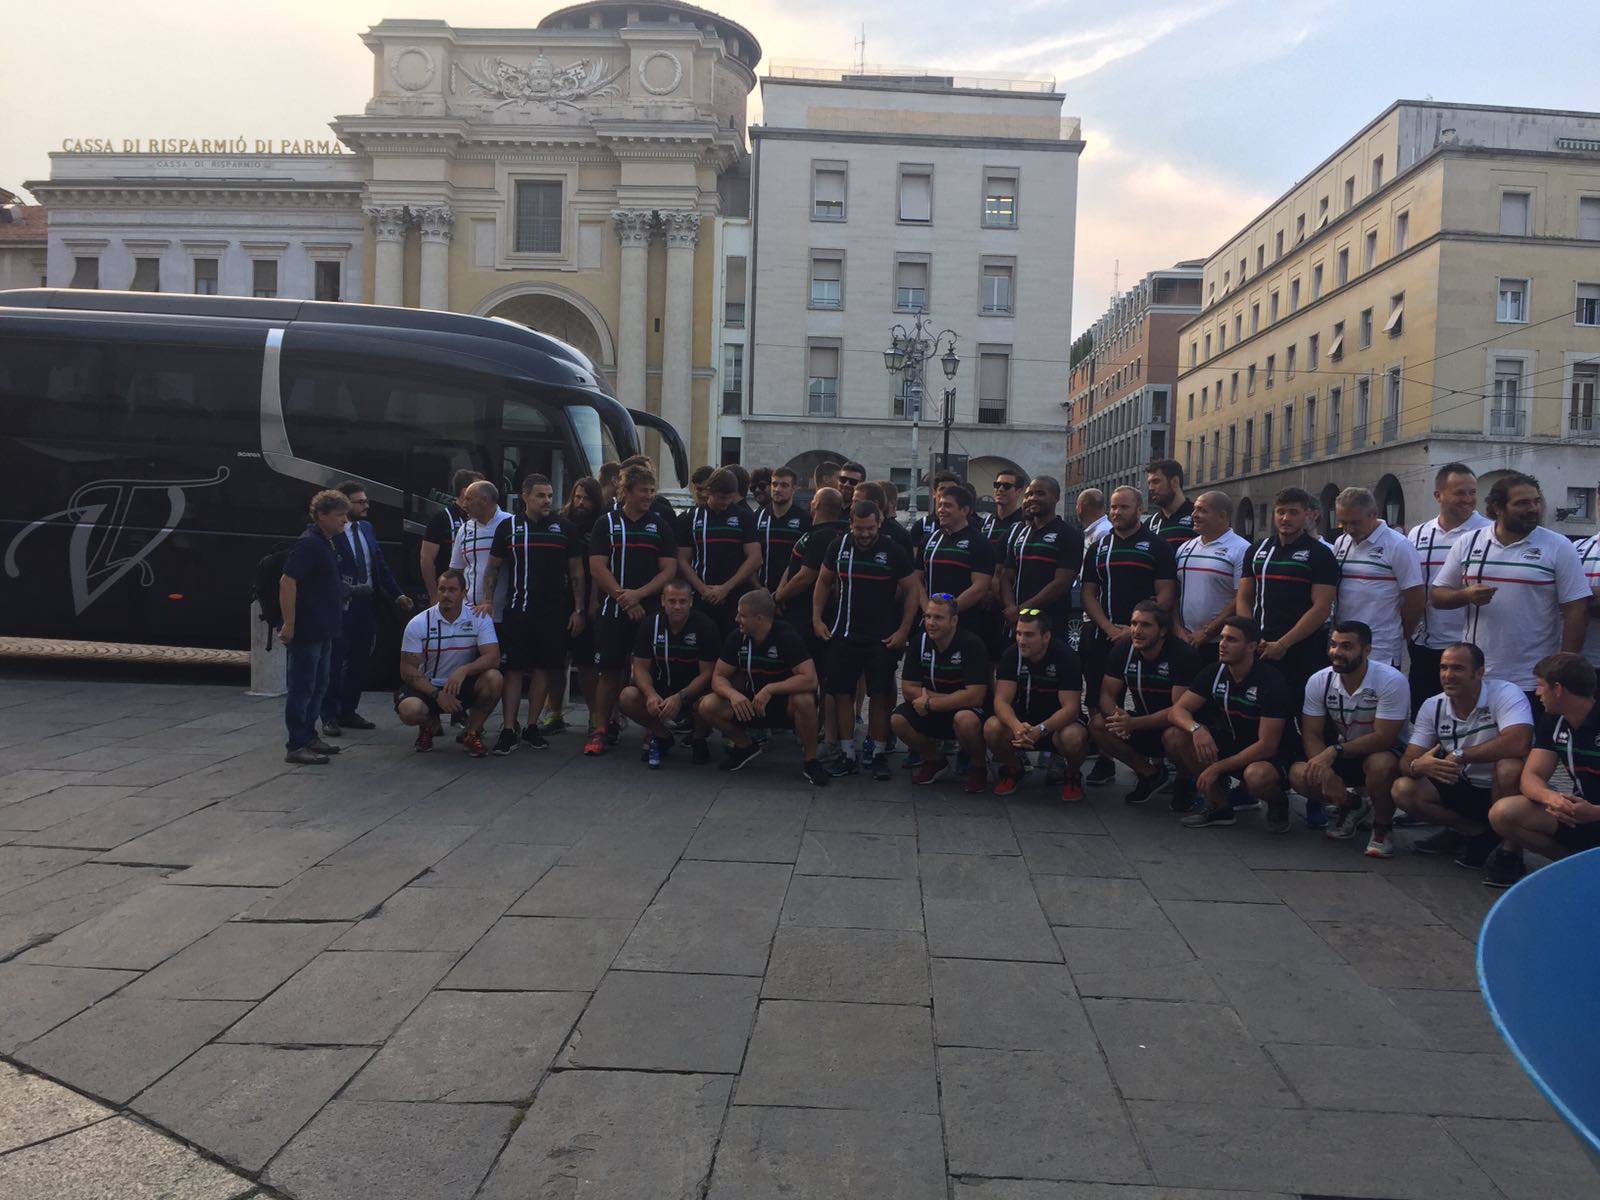 Presentazione squadra Zebre Rugby stagione 2016 / 2017 al sindaco di Parma